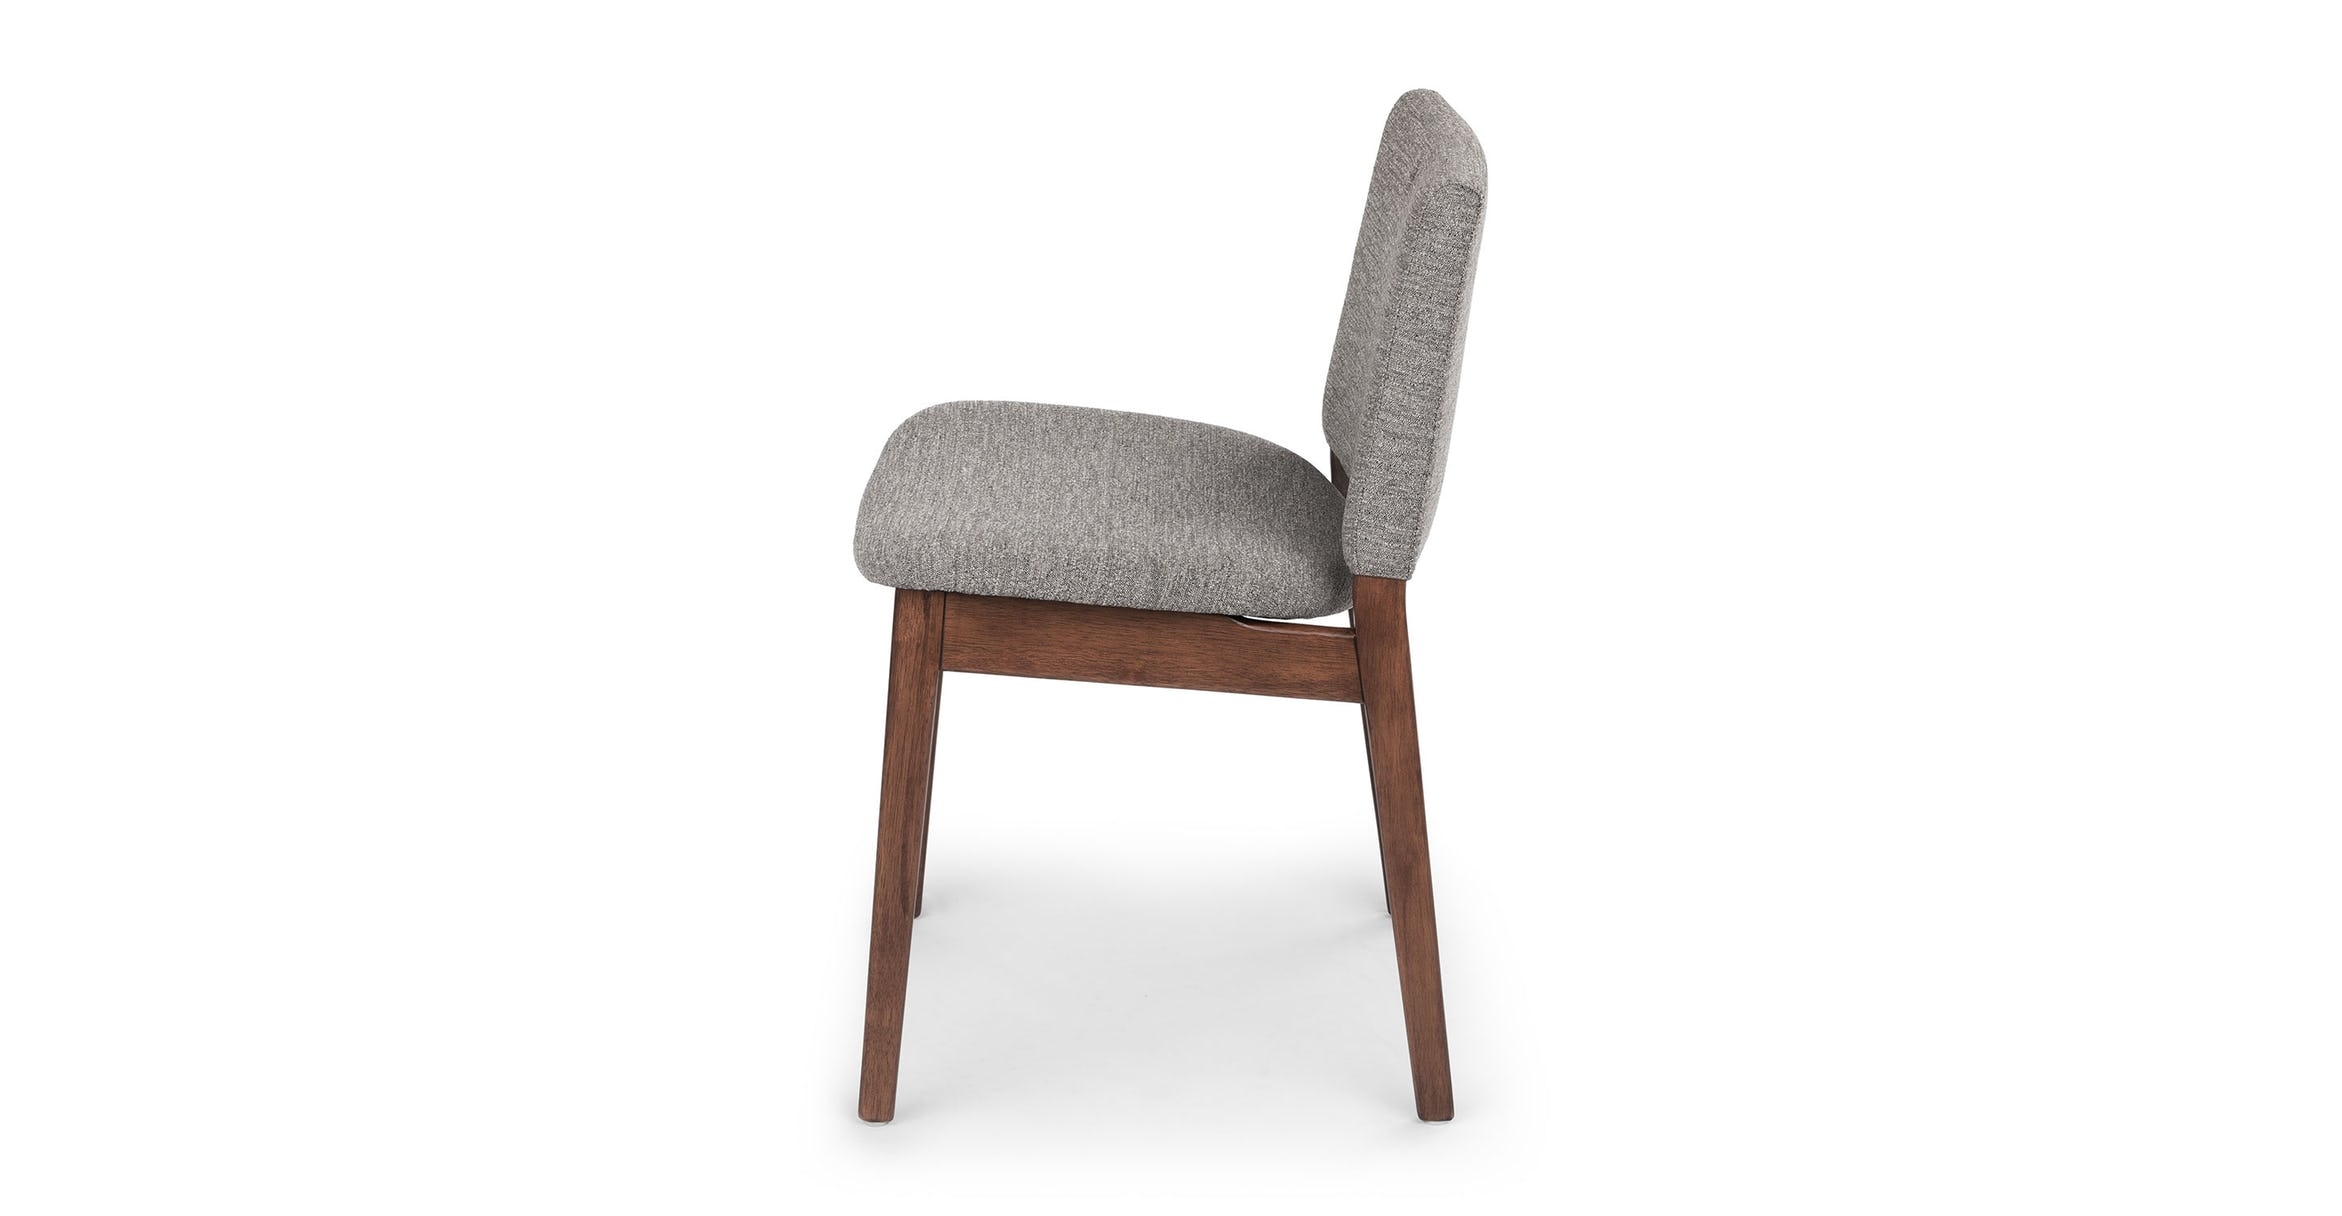 Nosh Quarry Gray Walnut Dining Chair - Image 2